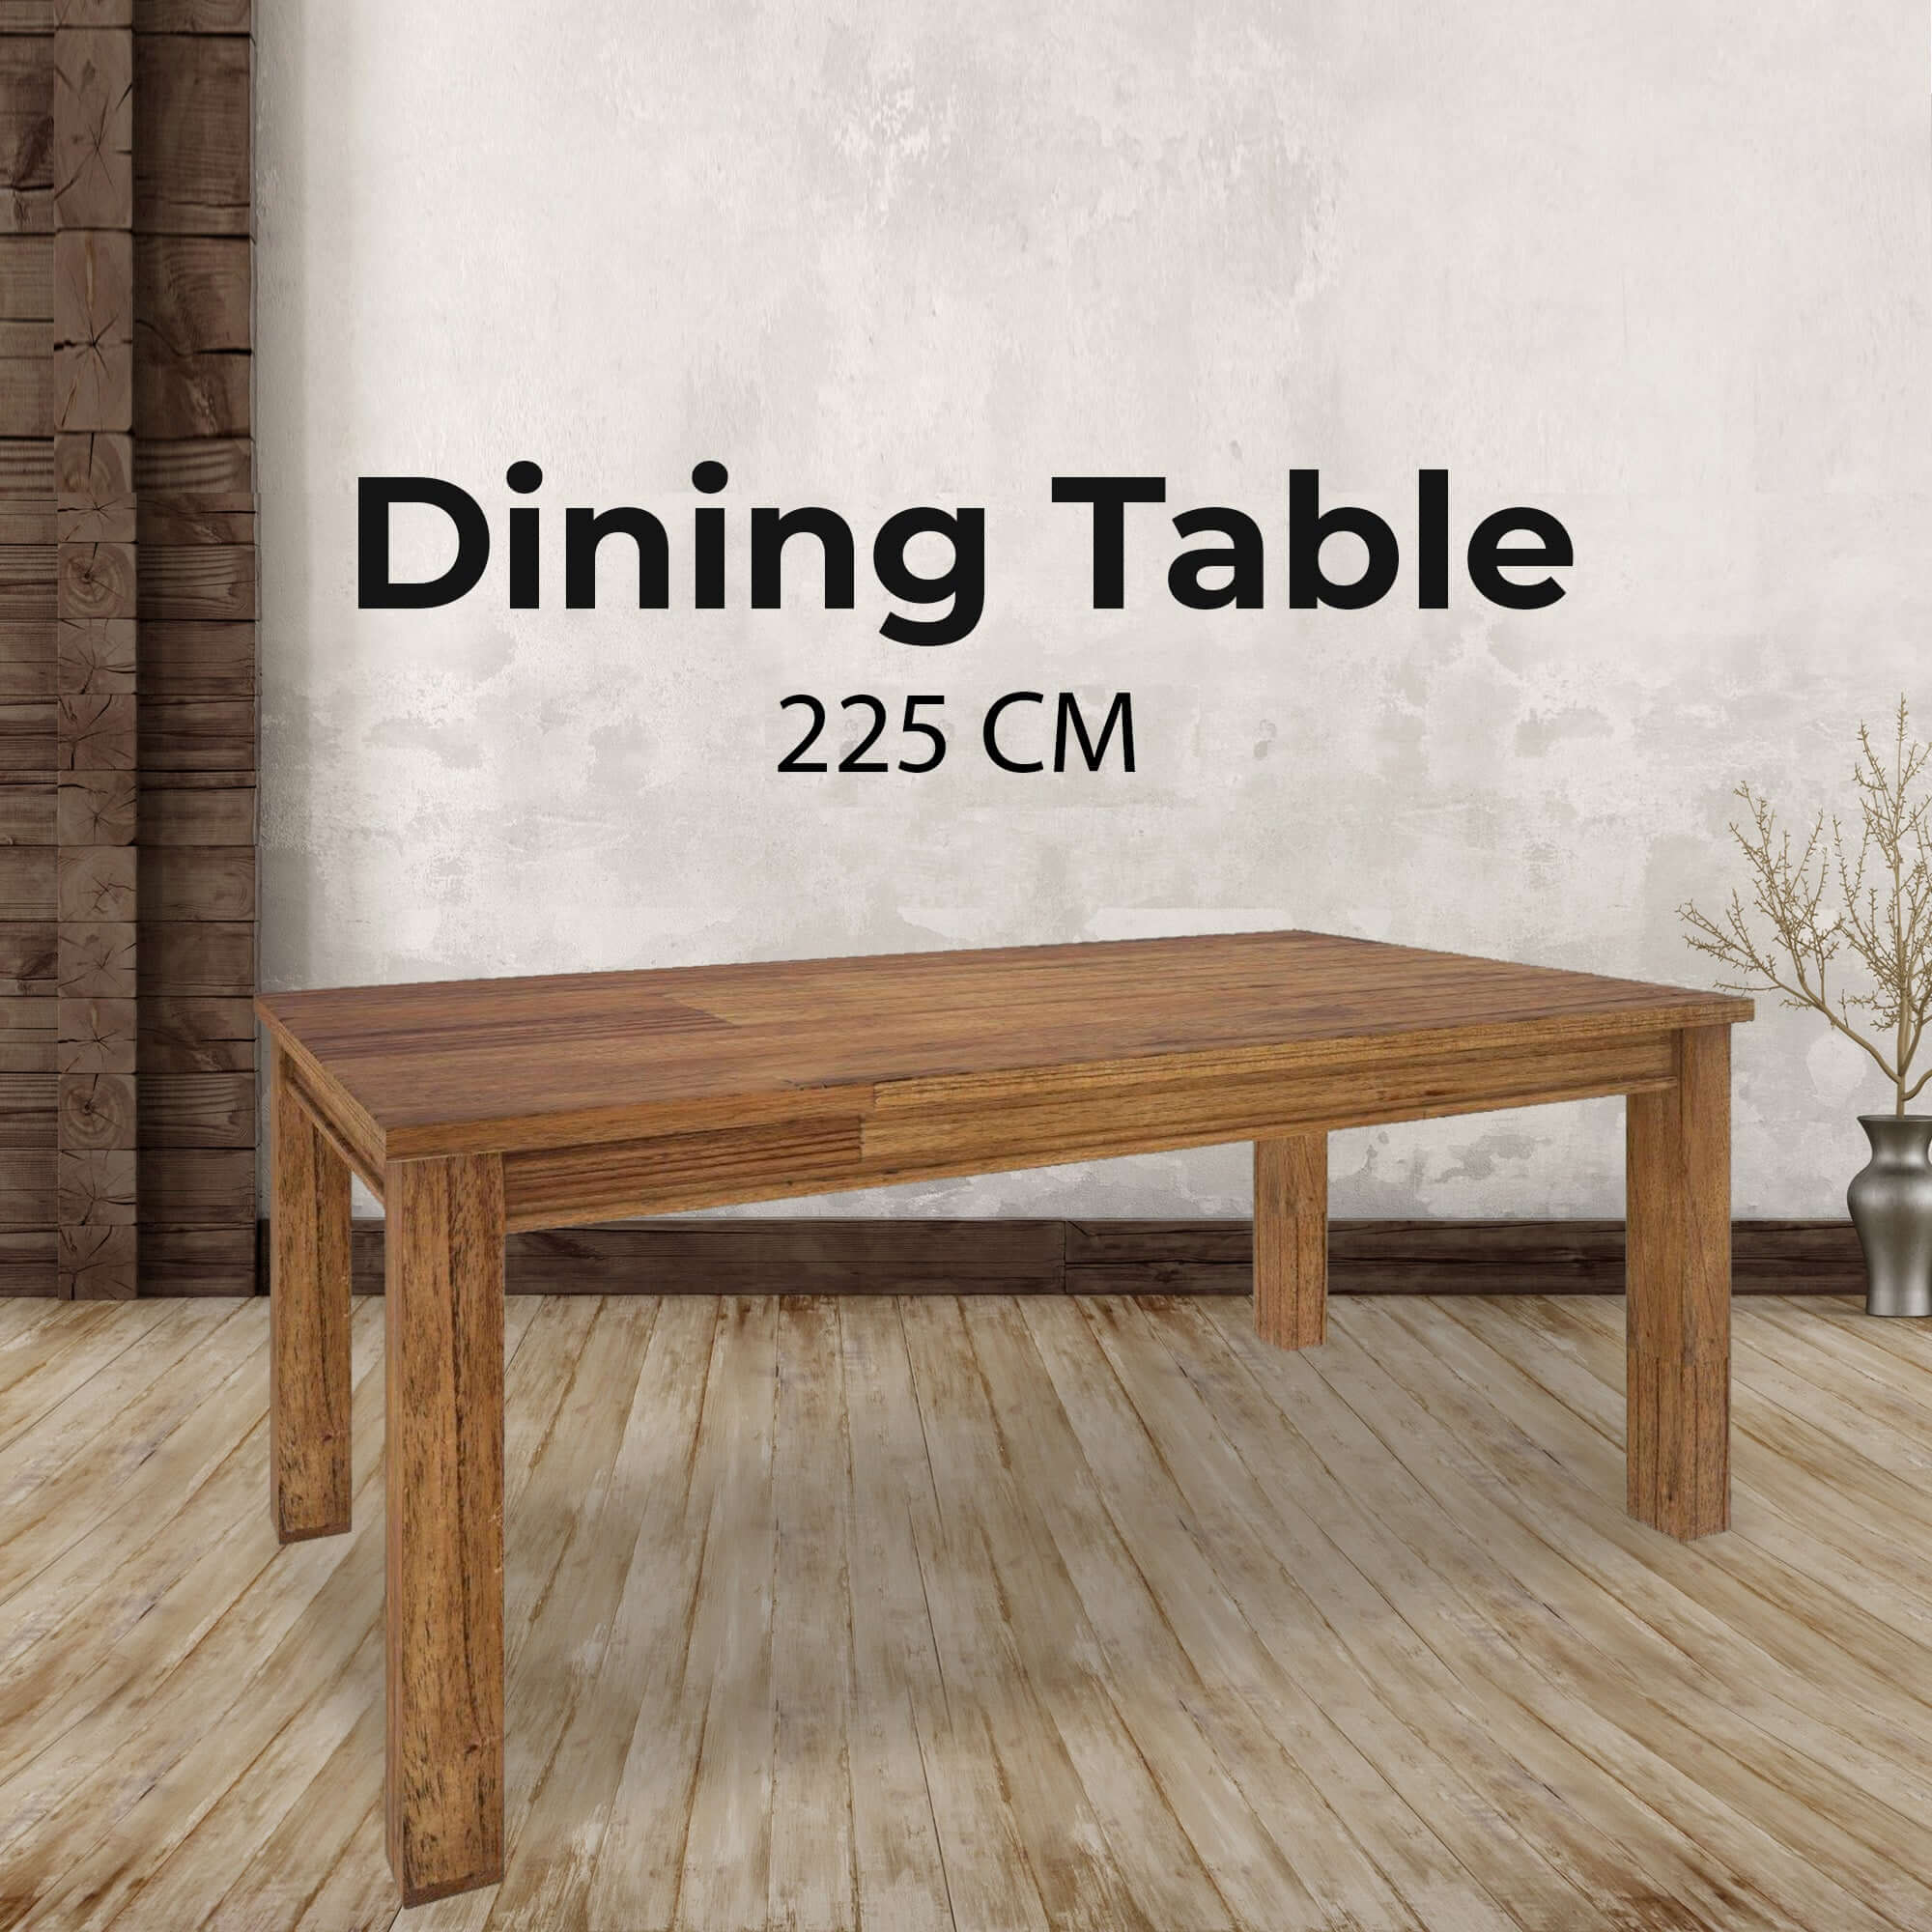 Birdsville Dining Table 225cm Solid Mt Ash Wood Home Dinner Furniture - Brown-Upinteriors